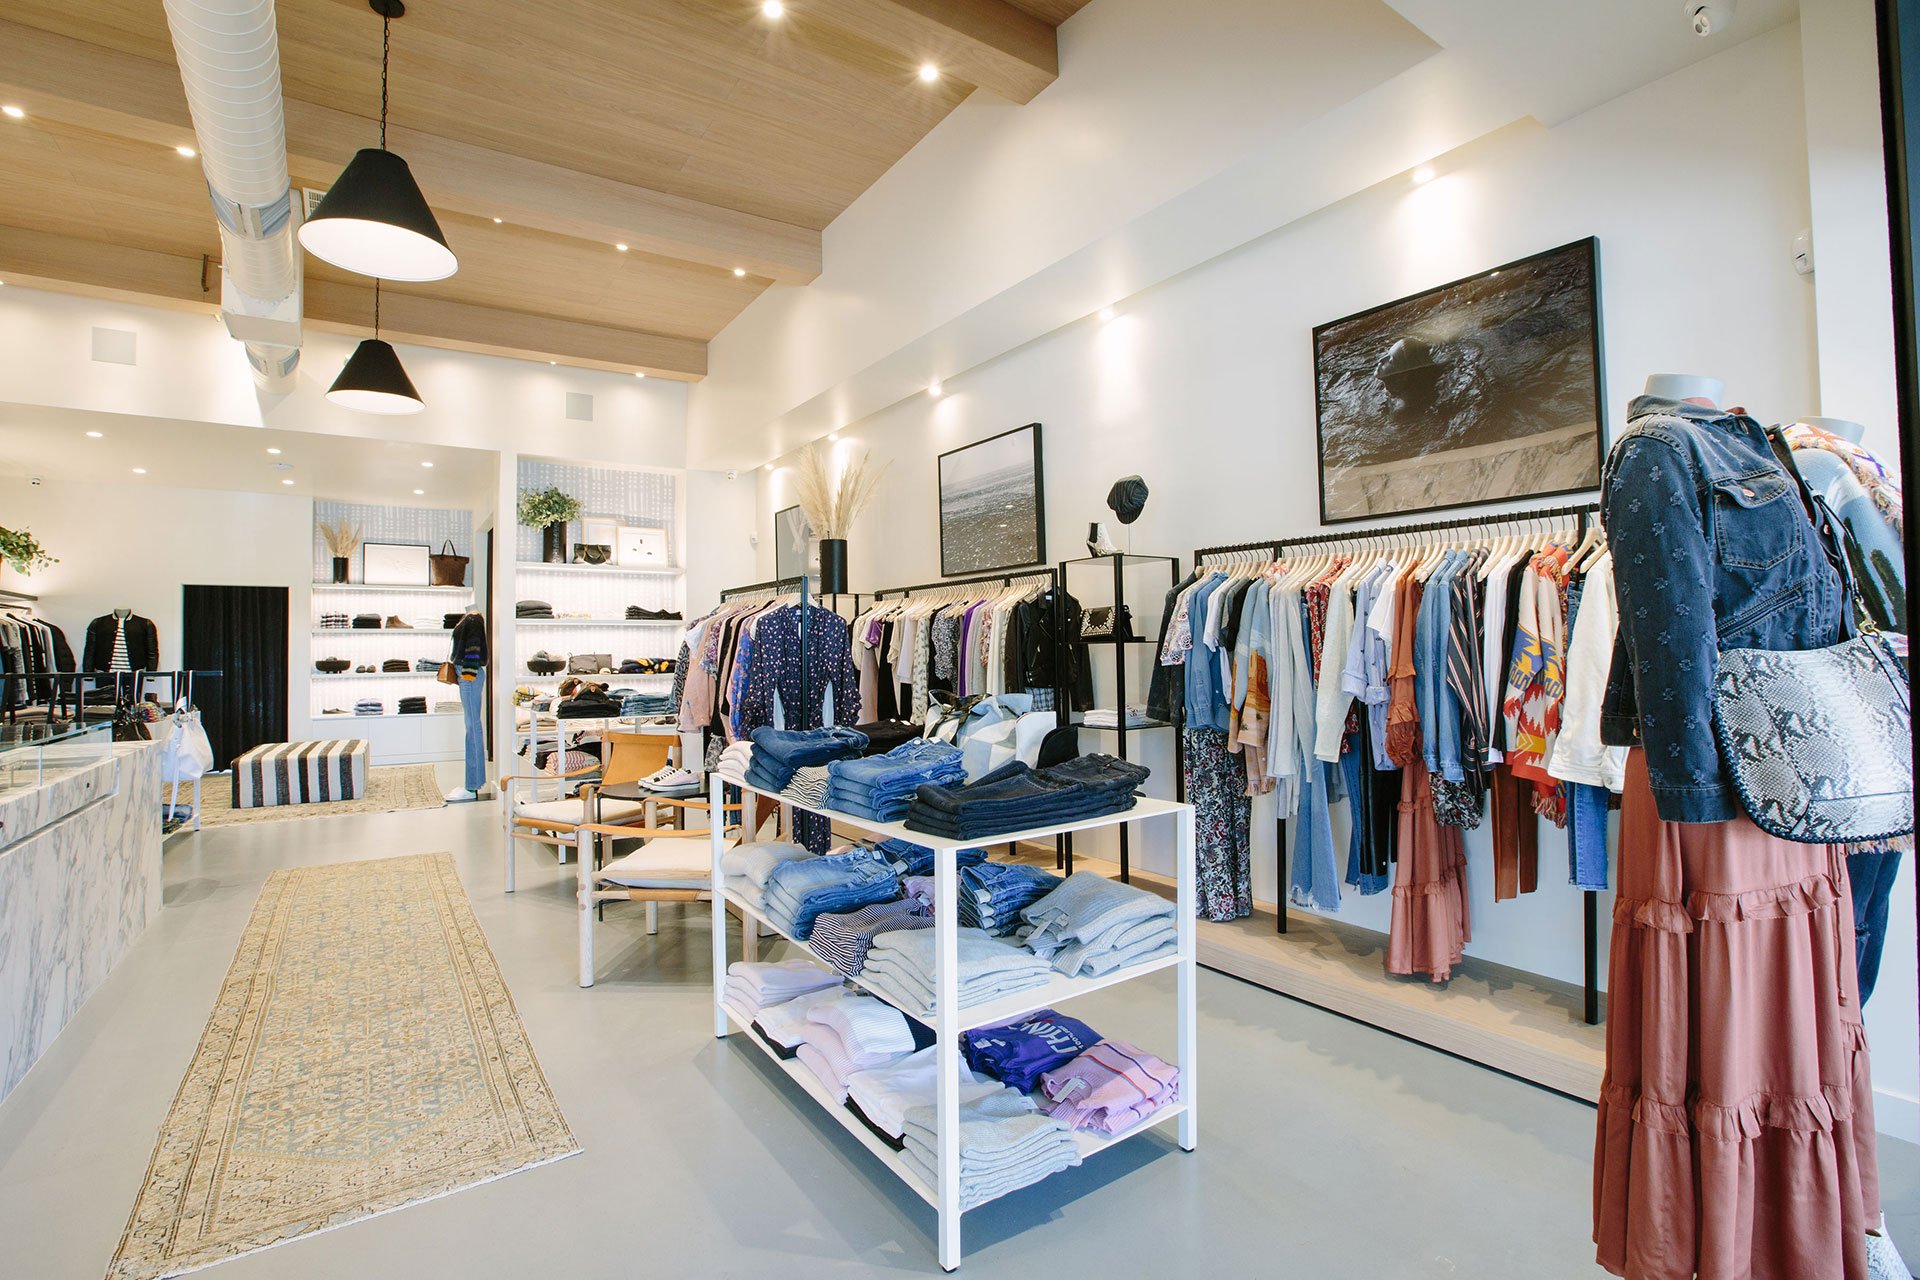 Quick Interior Design Ideas To Boost Your Retail Sales